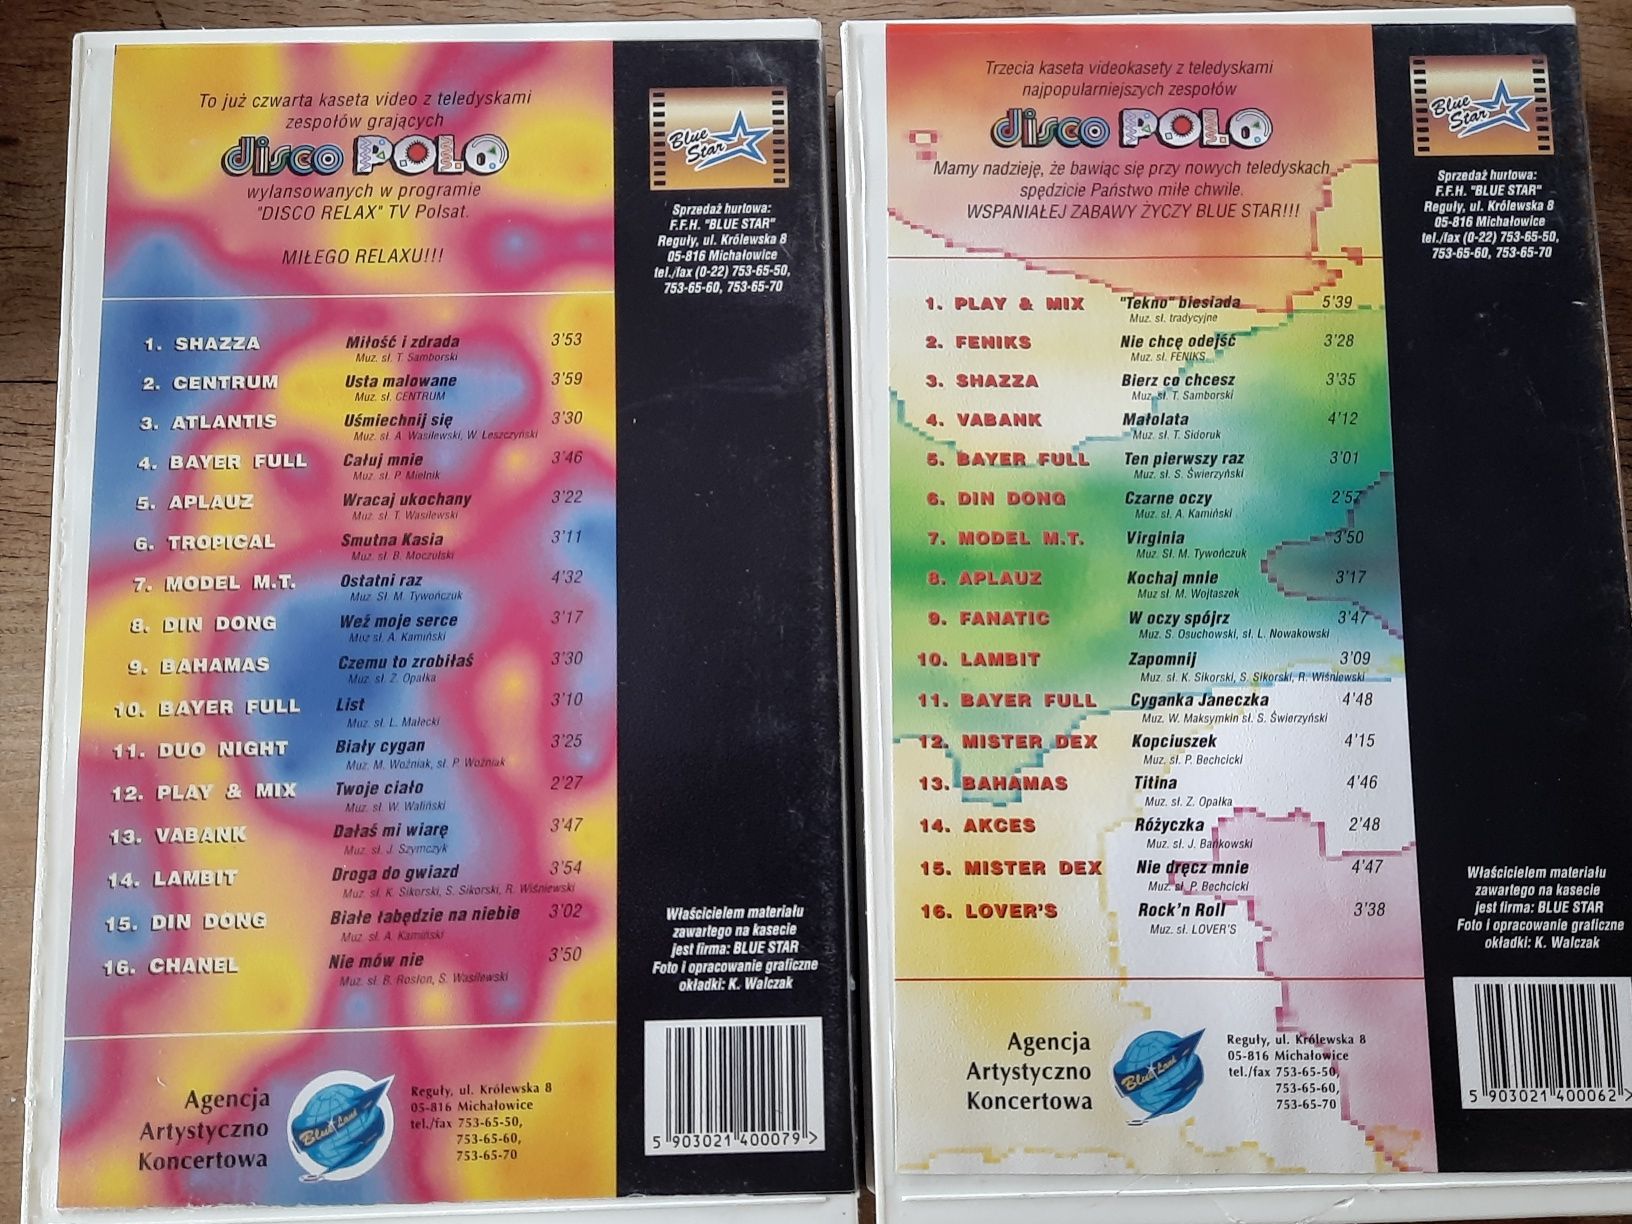 Disco Polo  vol. 3 i vol. 4 kasety VHS video